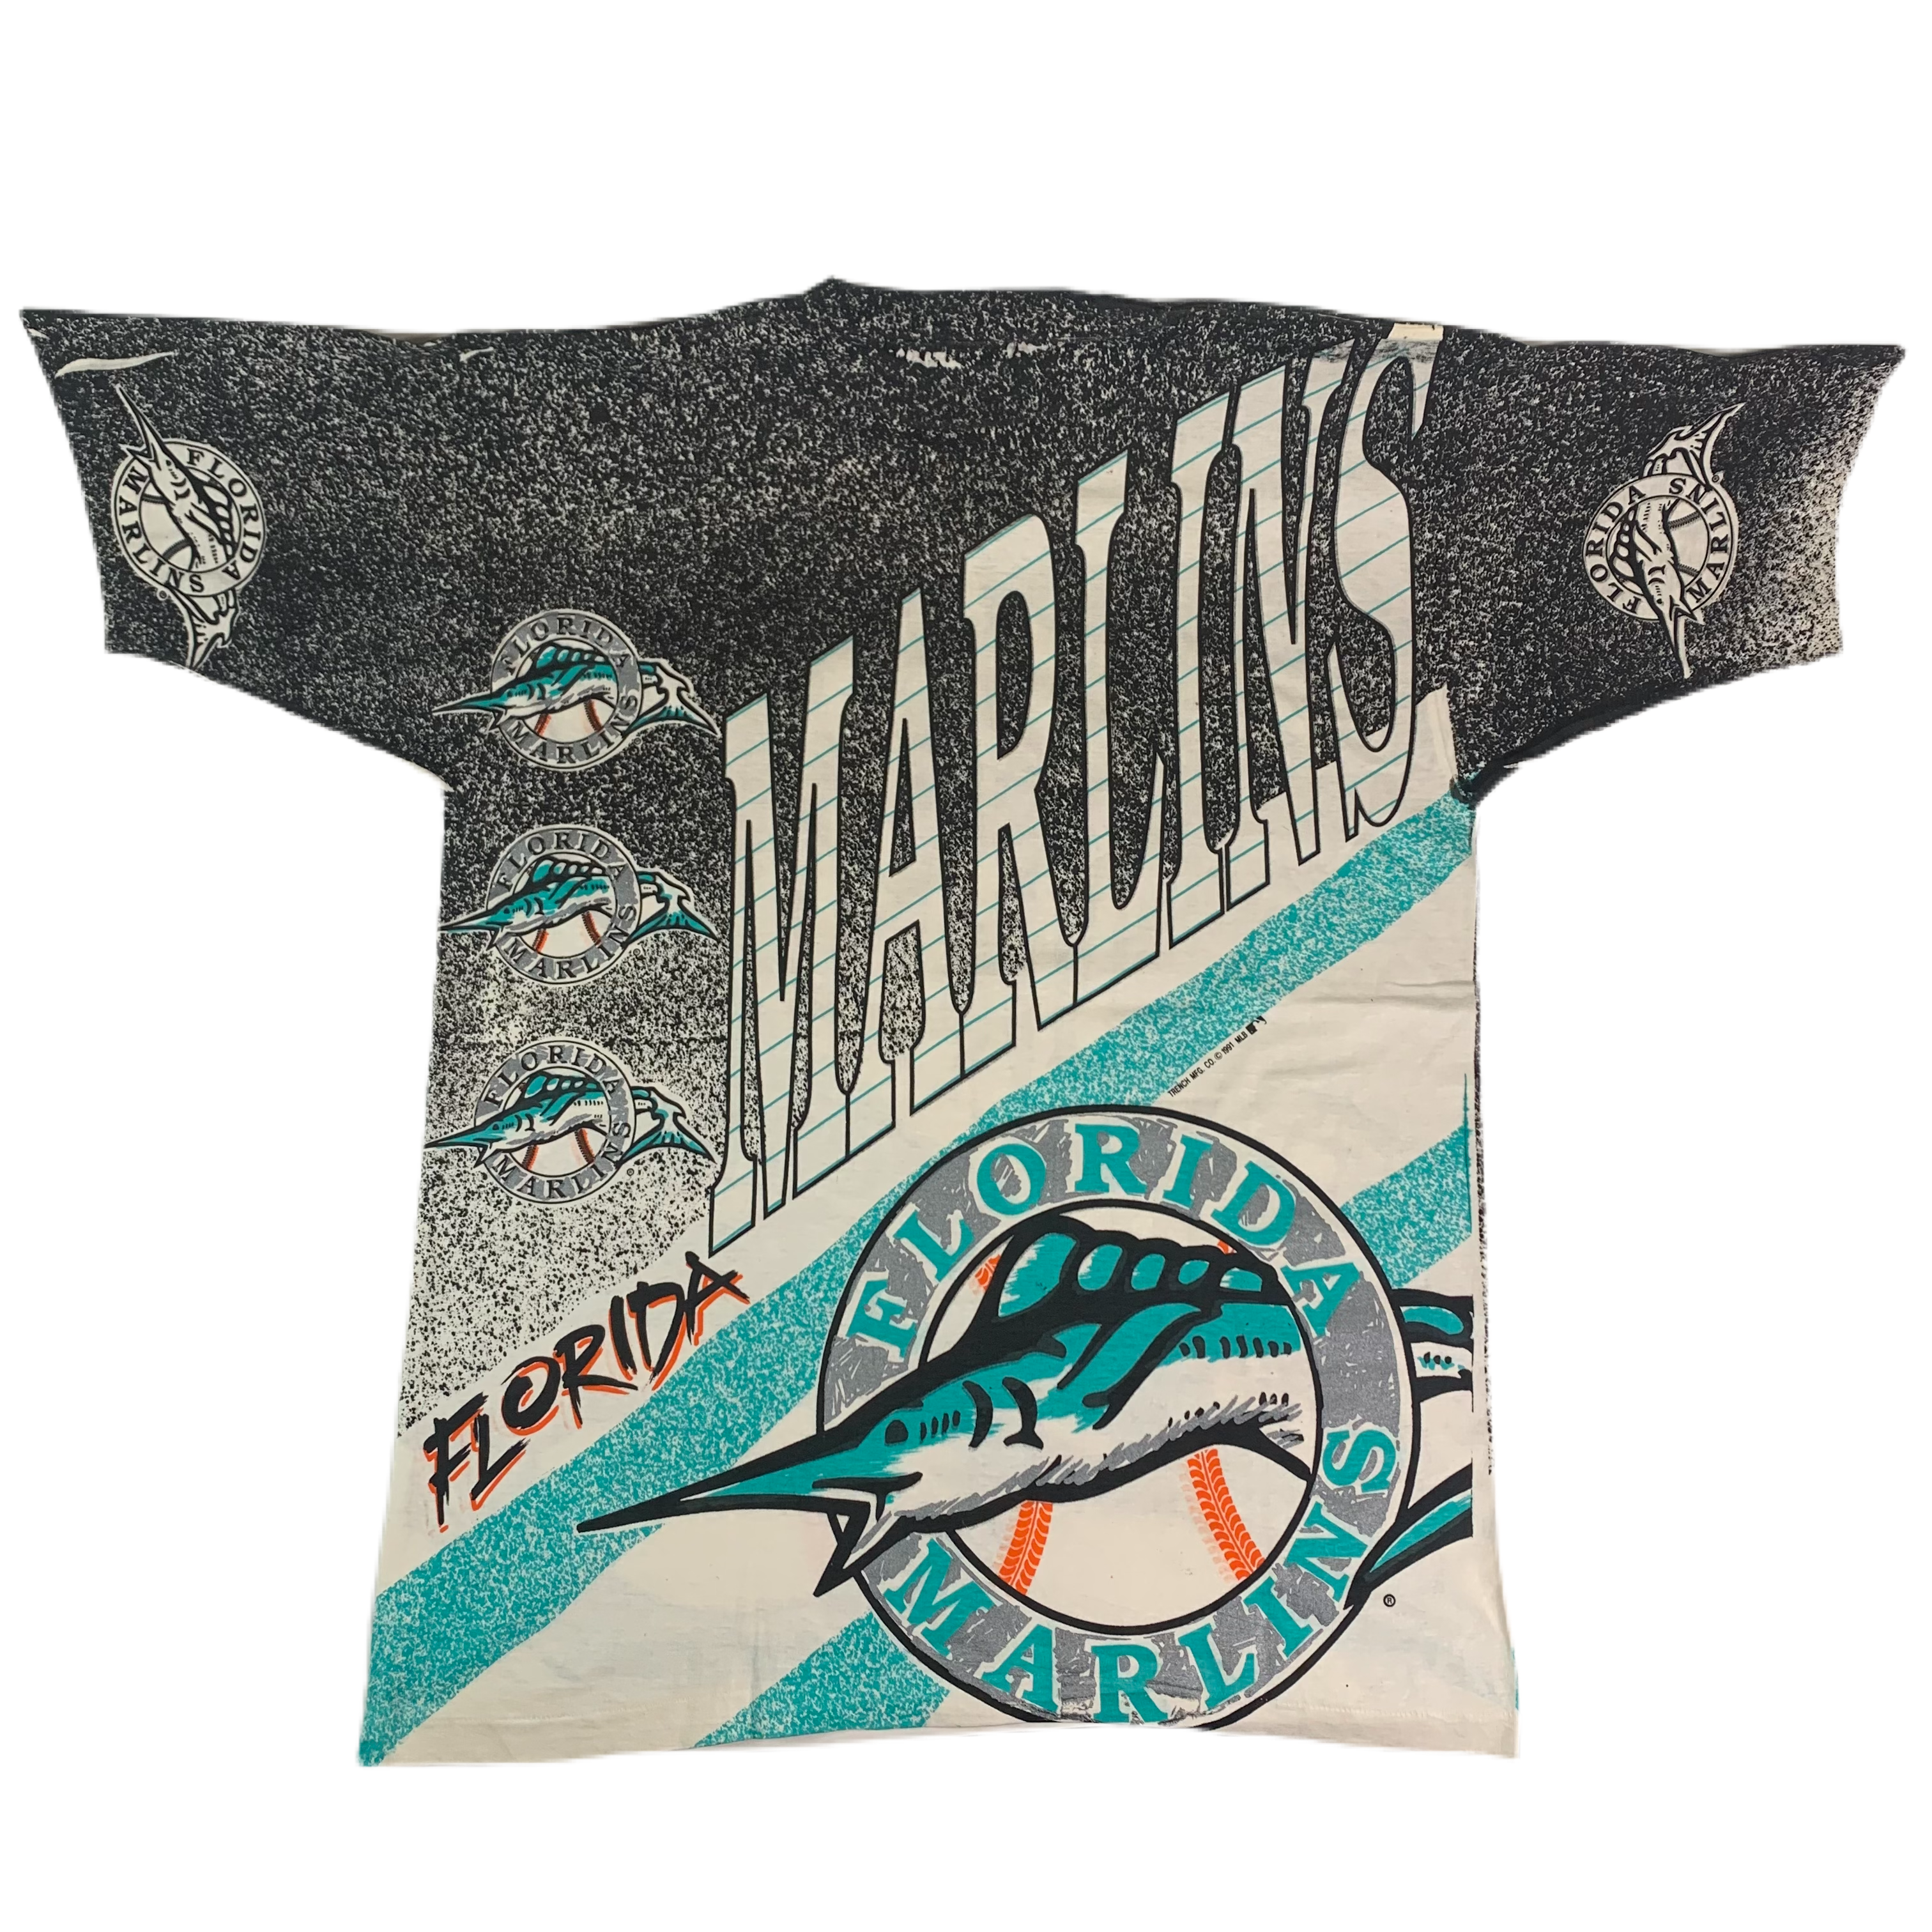 Vintage NUTMEG Florida Marlins Miami 90's T-Shirt XL